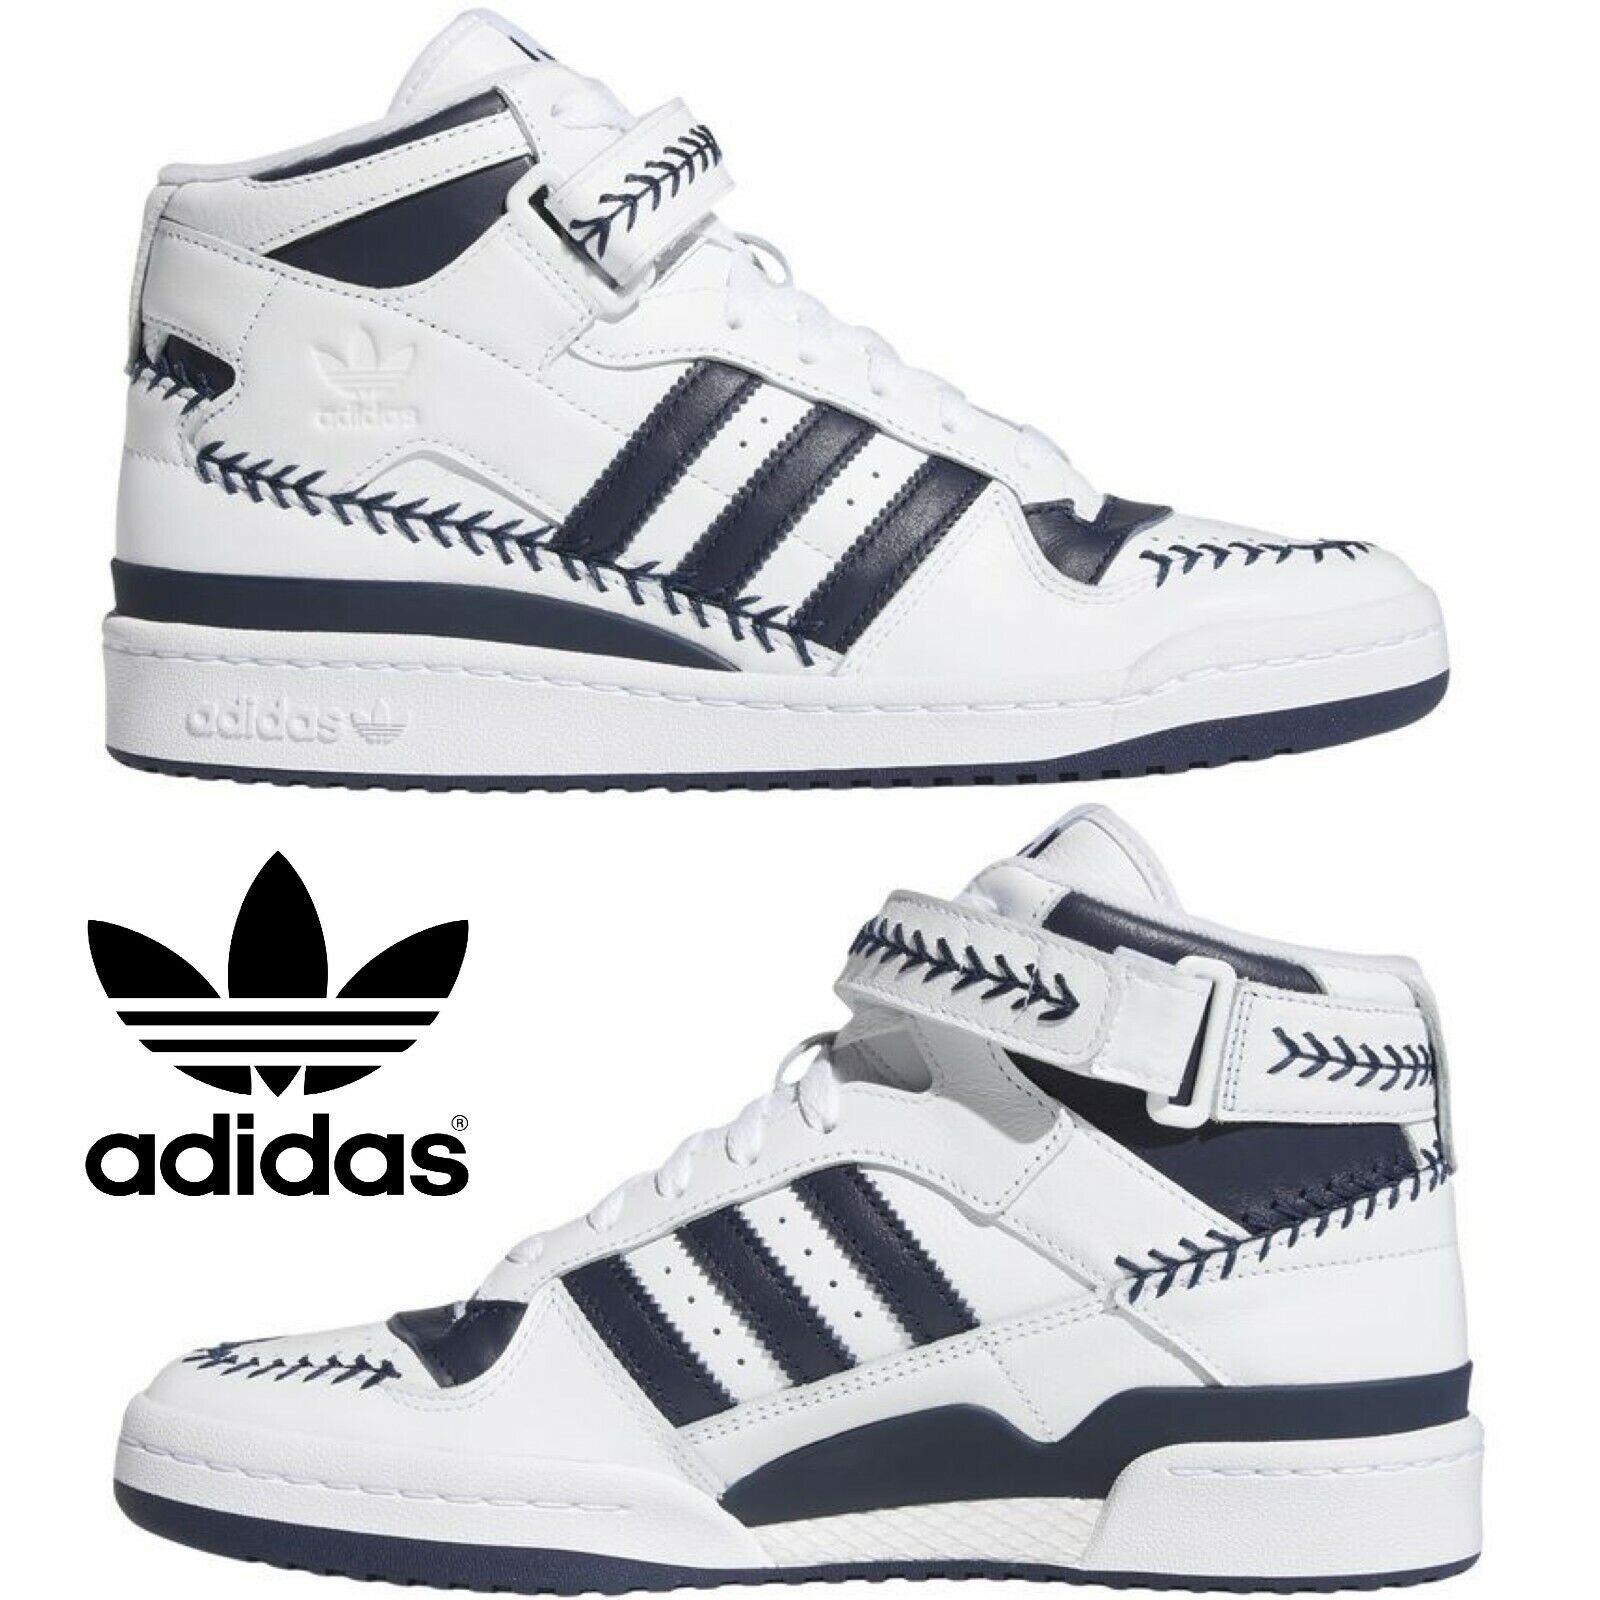 Adidas Originals Forum Mid Men`s Sneakers Comfort Casual Shoes White Black